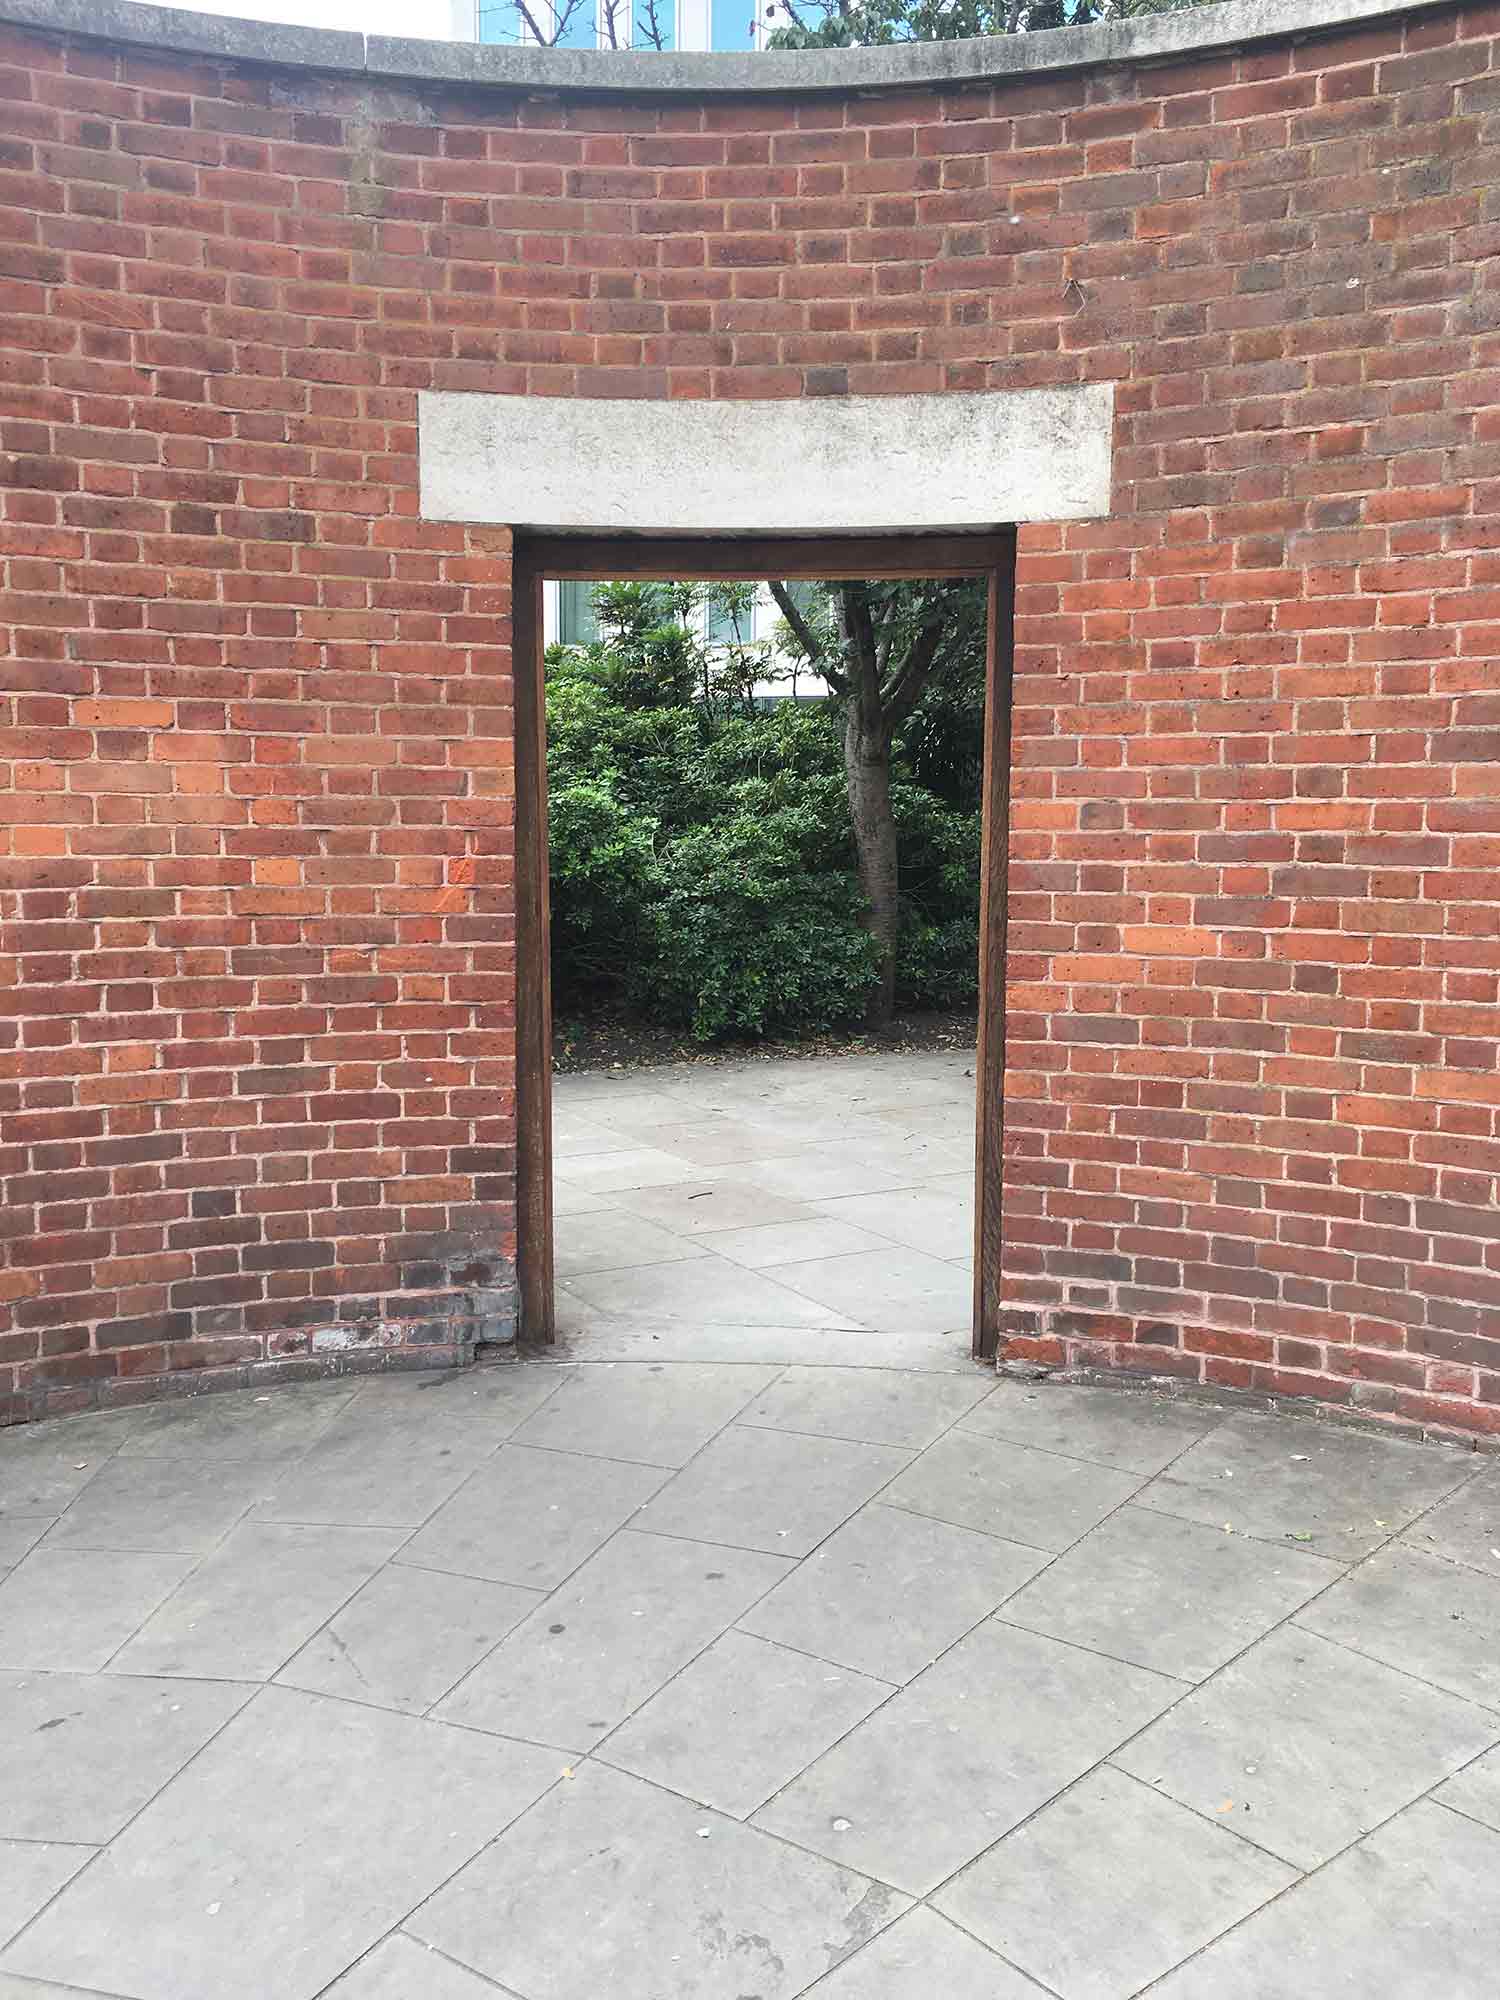 Entrance to Holland Park, photograph by Ella Parry-Davies, August 2019